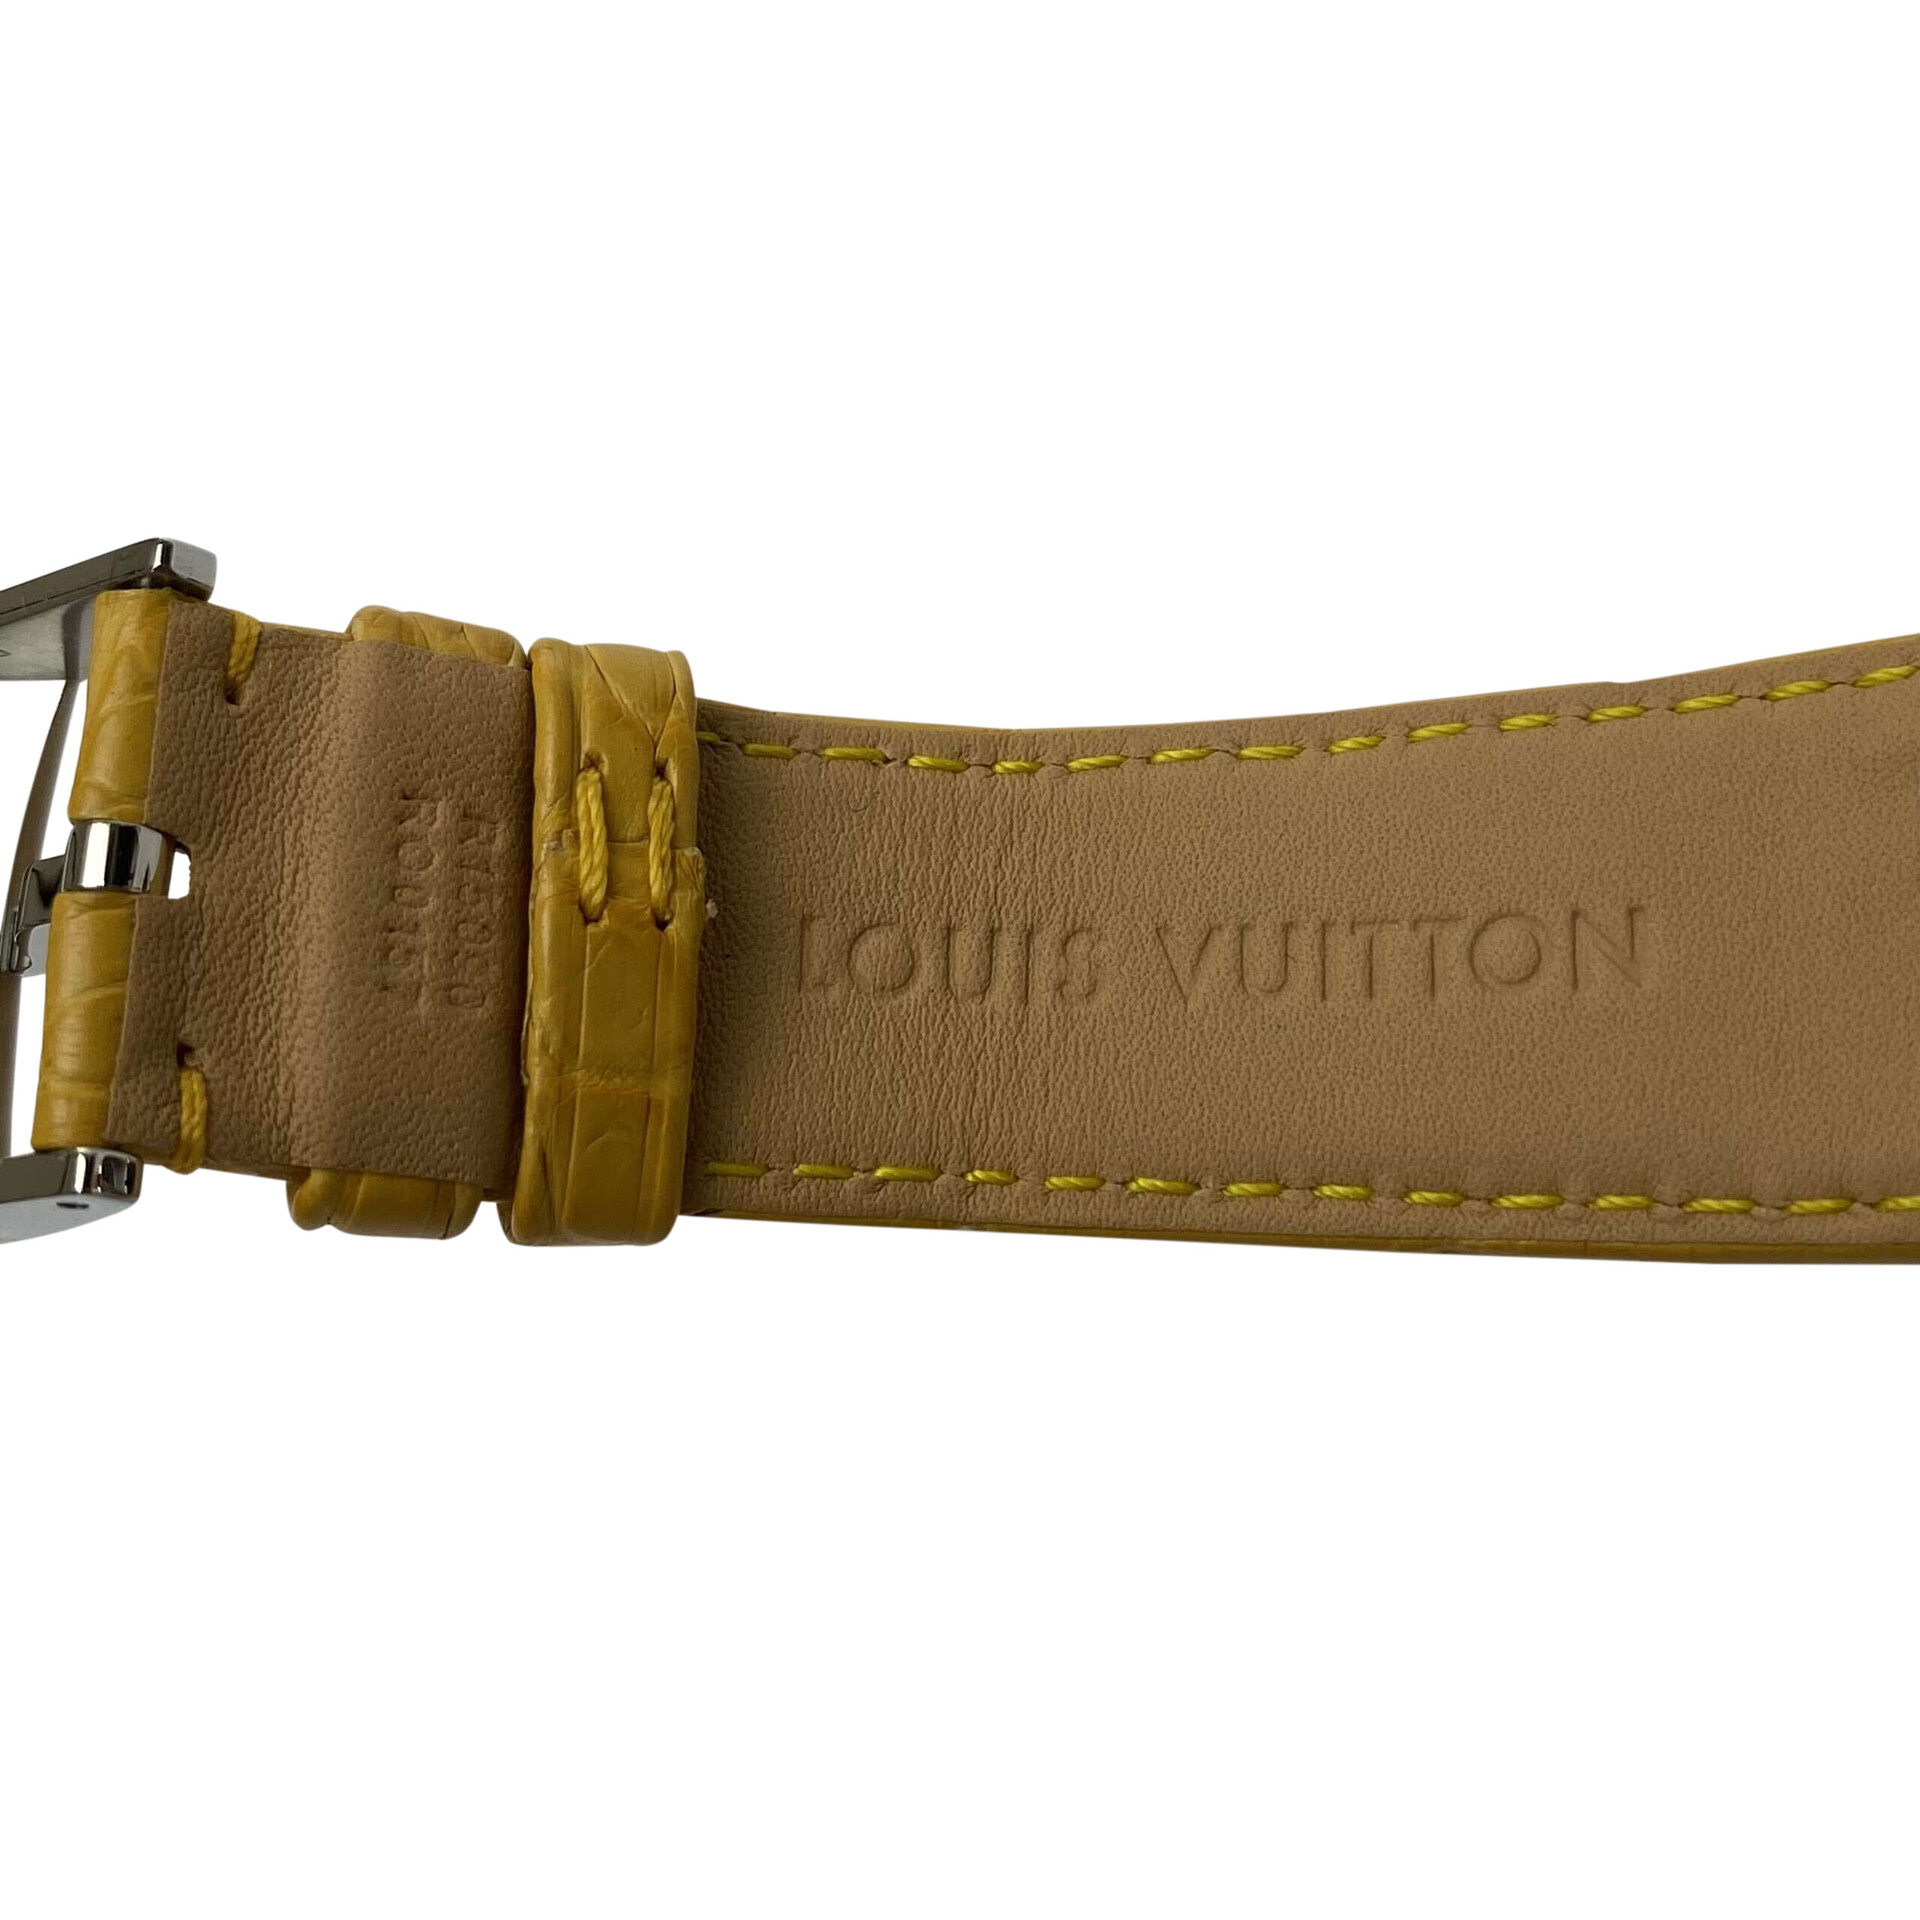 Relógio Louis Vuitton Tambour Moon GMT - Automático